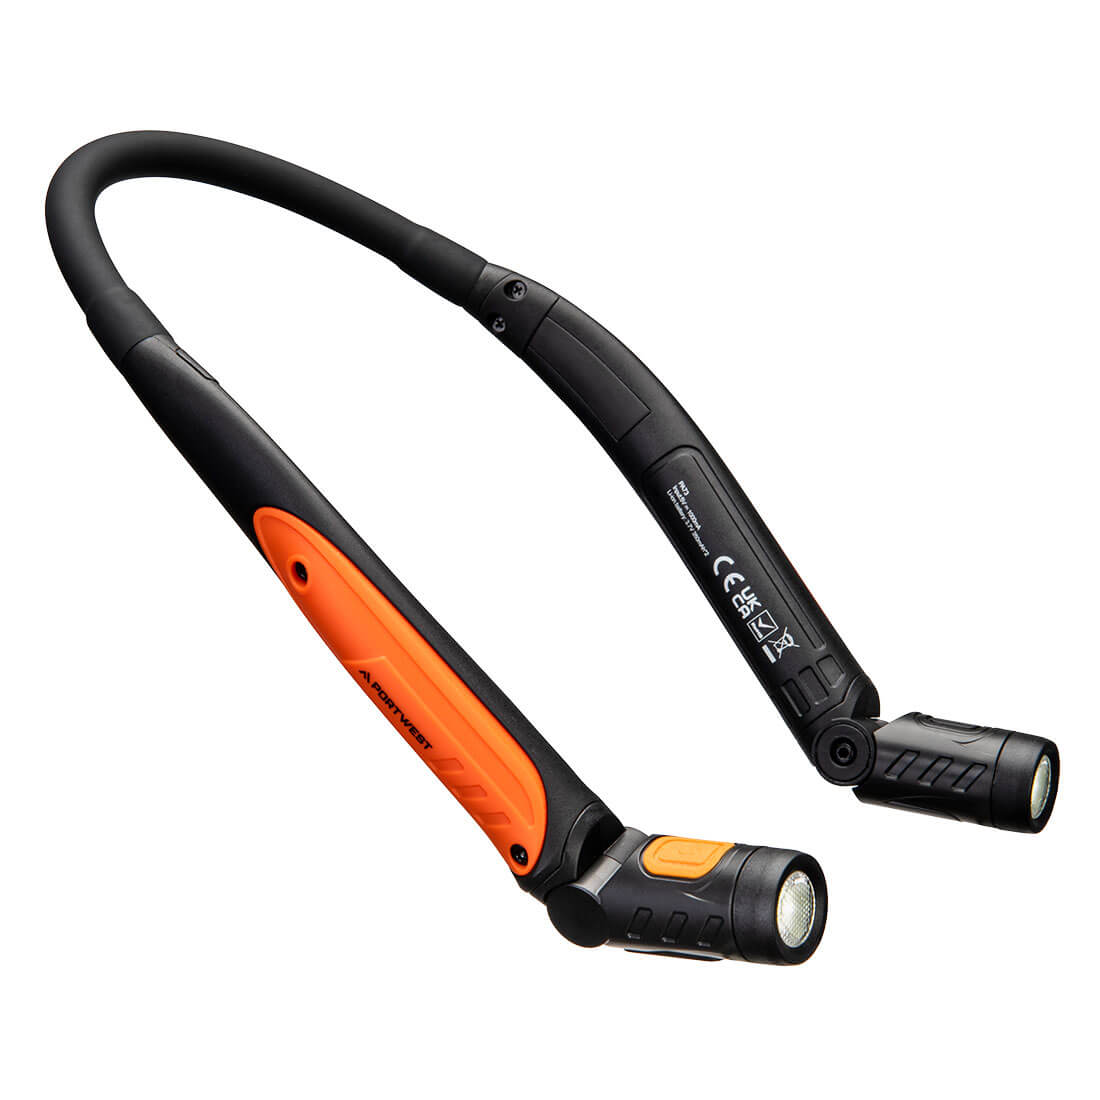 USB Rechargeable LED Neck Light Black/Orange 